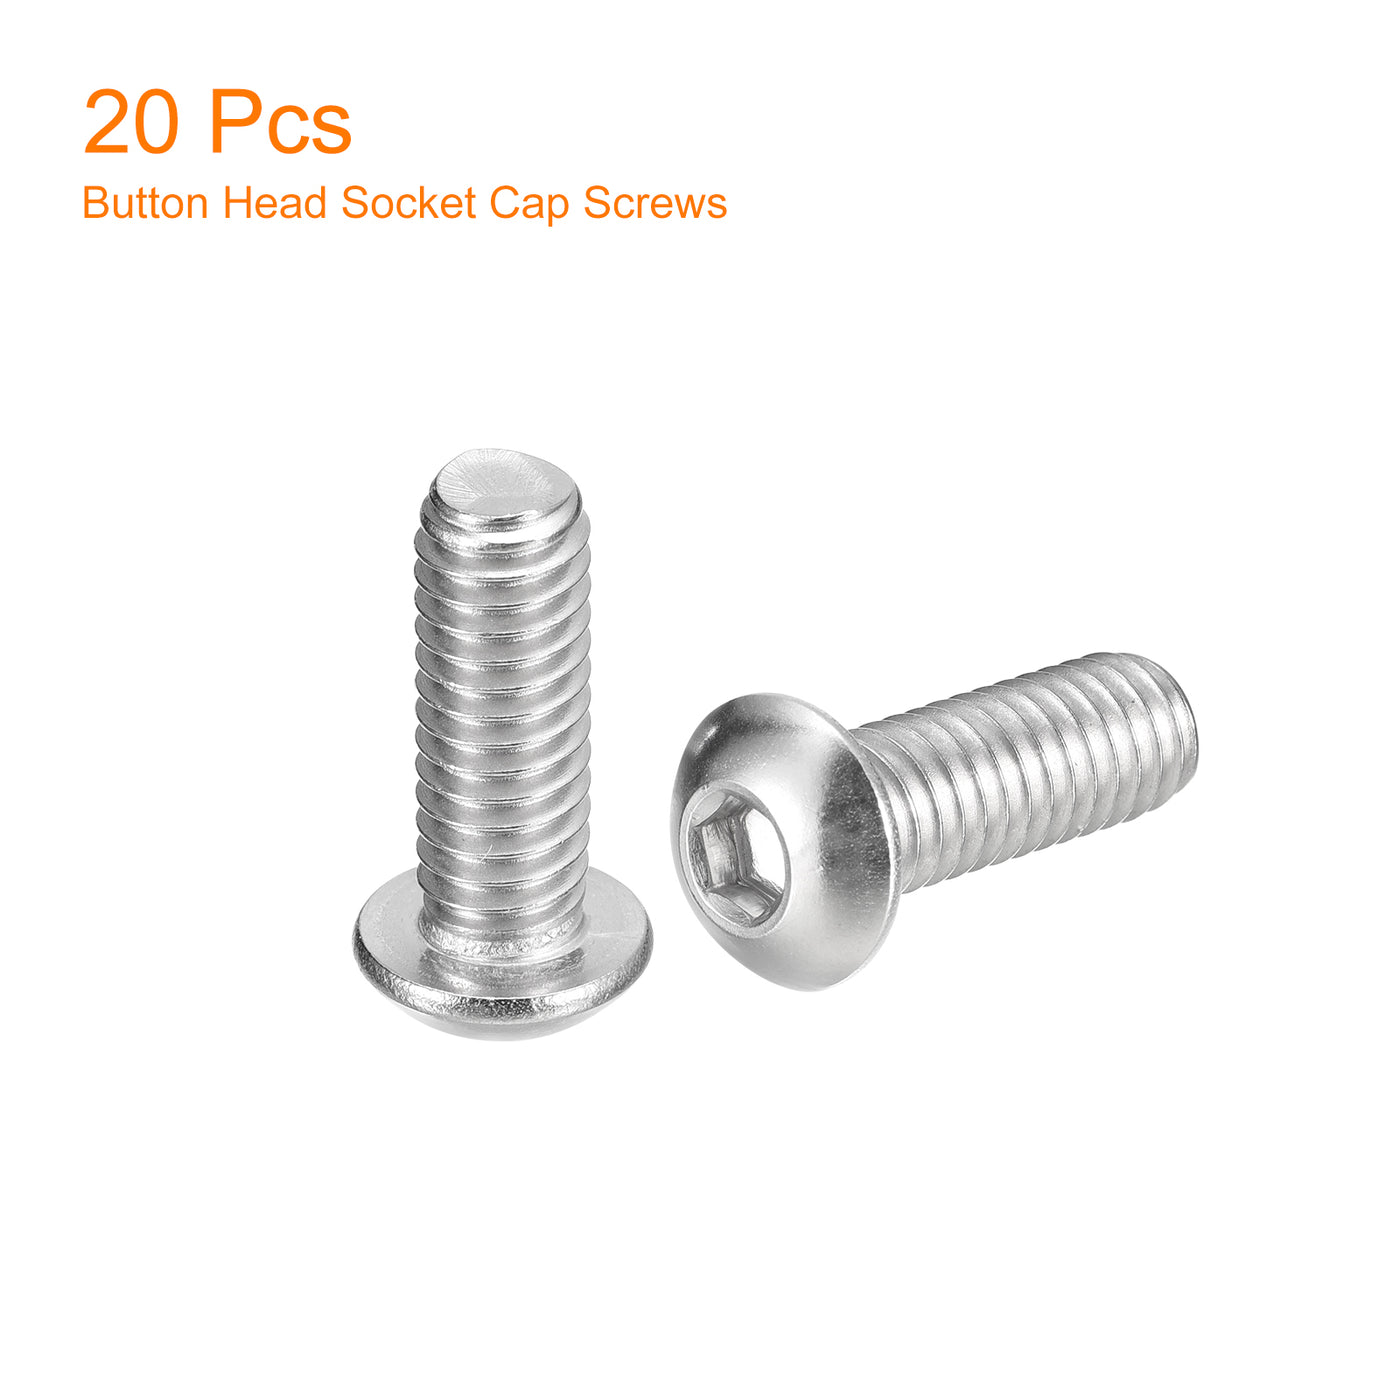 uxcell Uxcell 5/16-18x7/8" Button Head Socket Cap Screws, 20pcs 304 Stainless Steel Screws